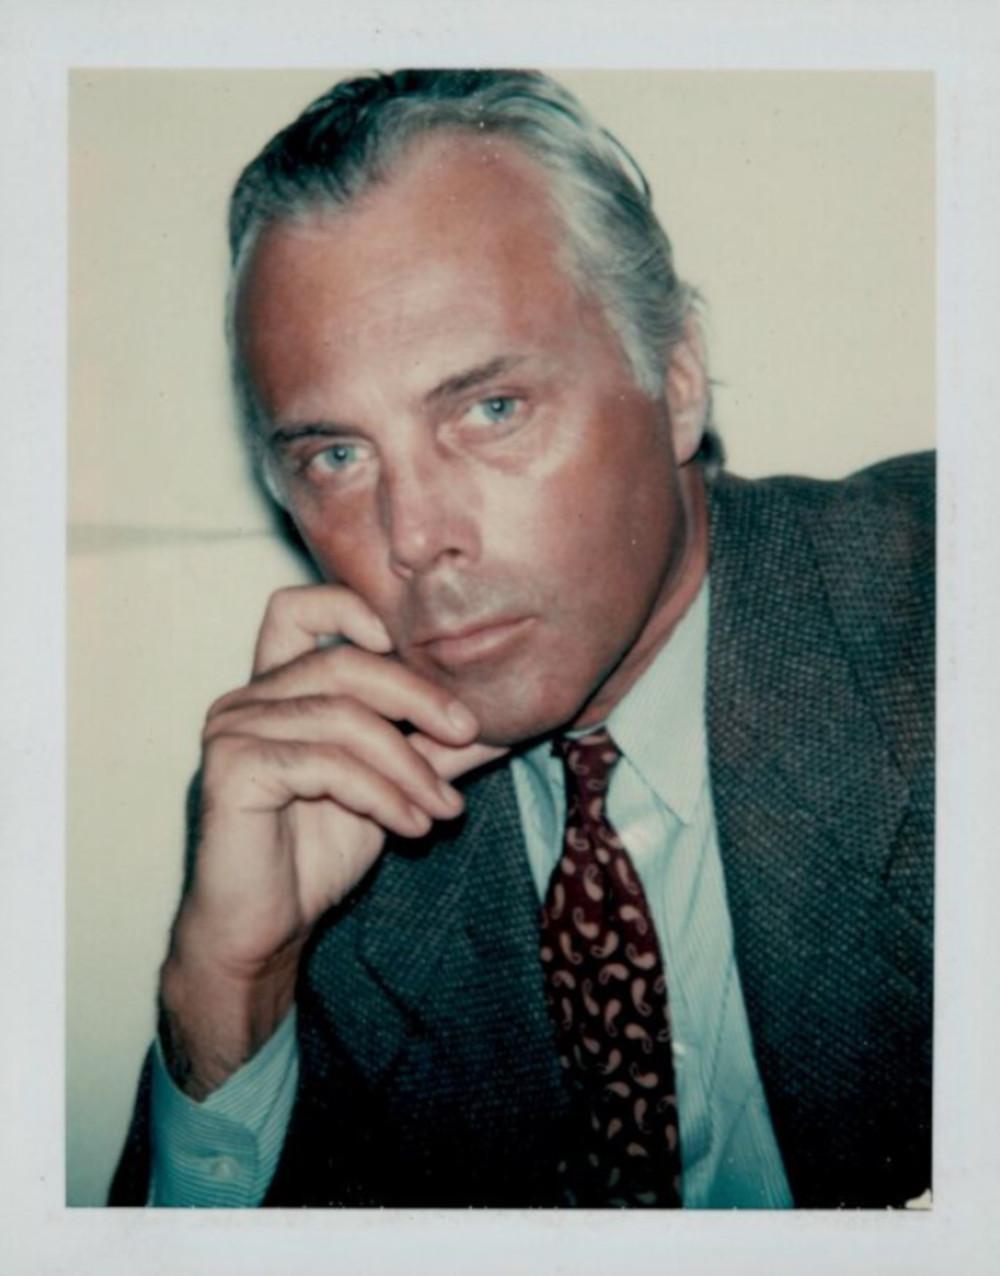 Andy Warhol Portrait Photograph - Giorgio Armani